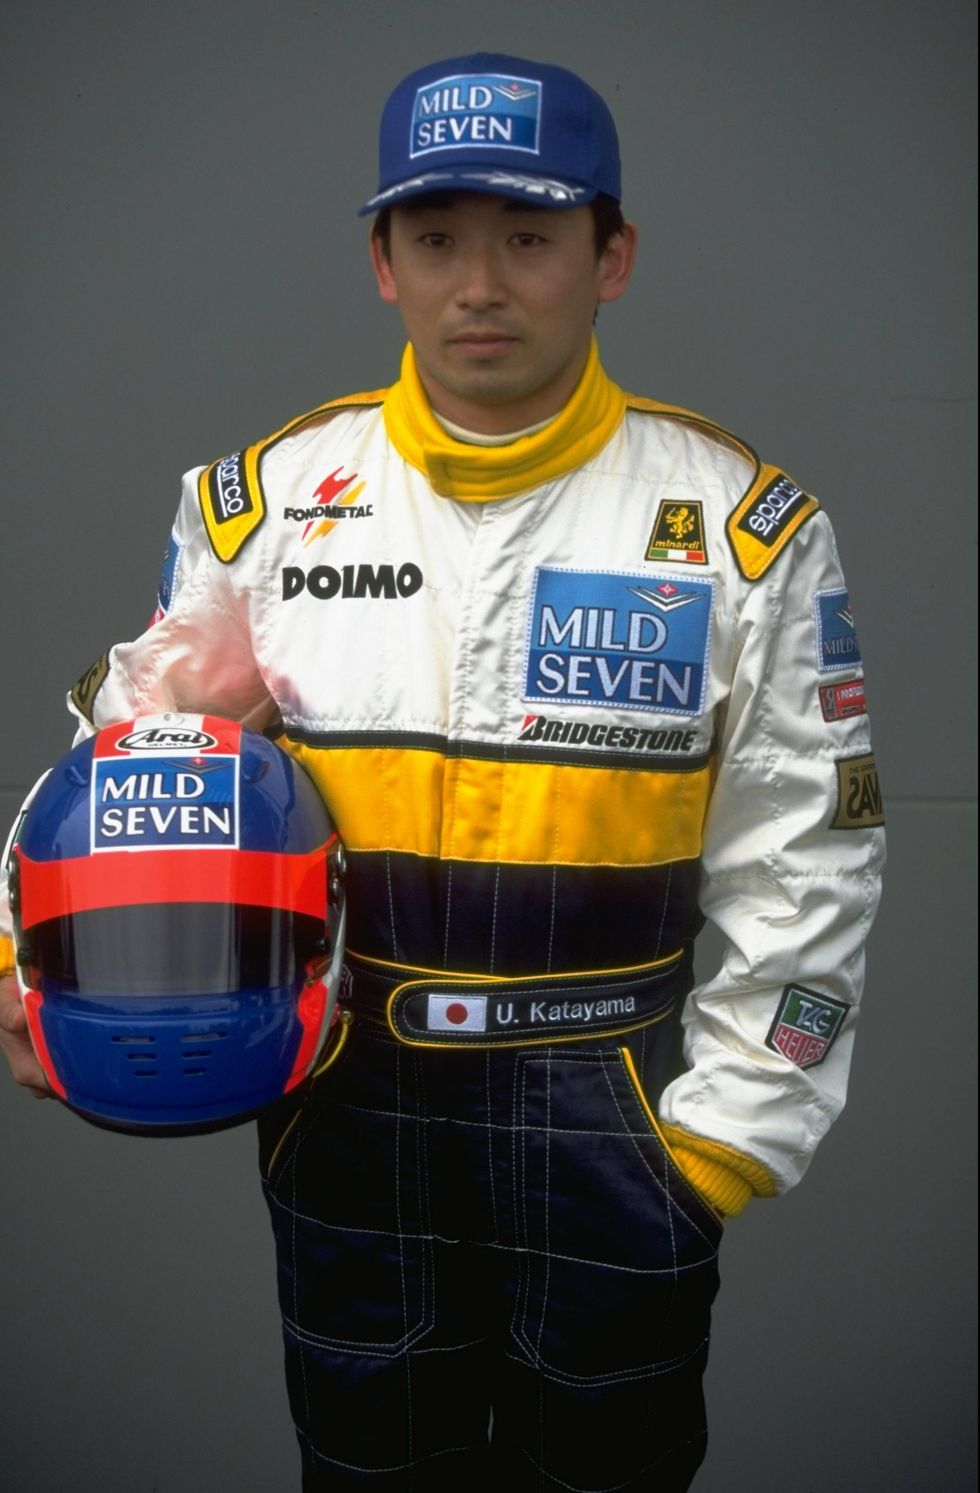 a man wearing a race car uniform